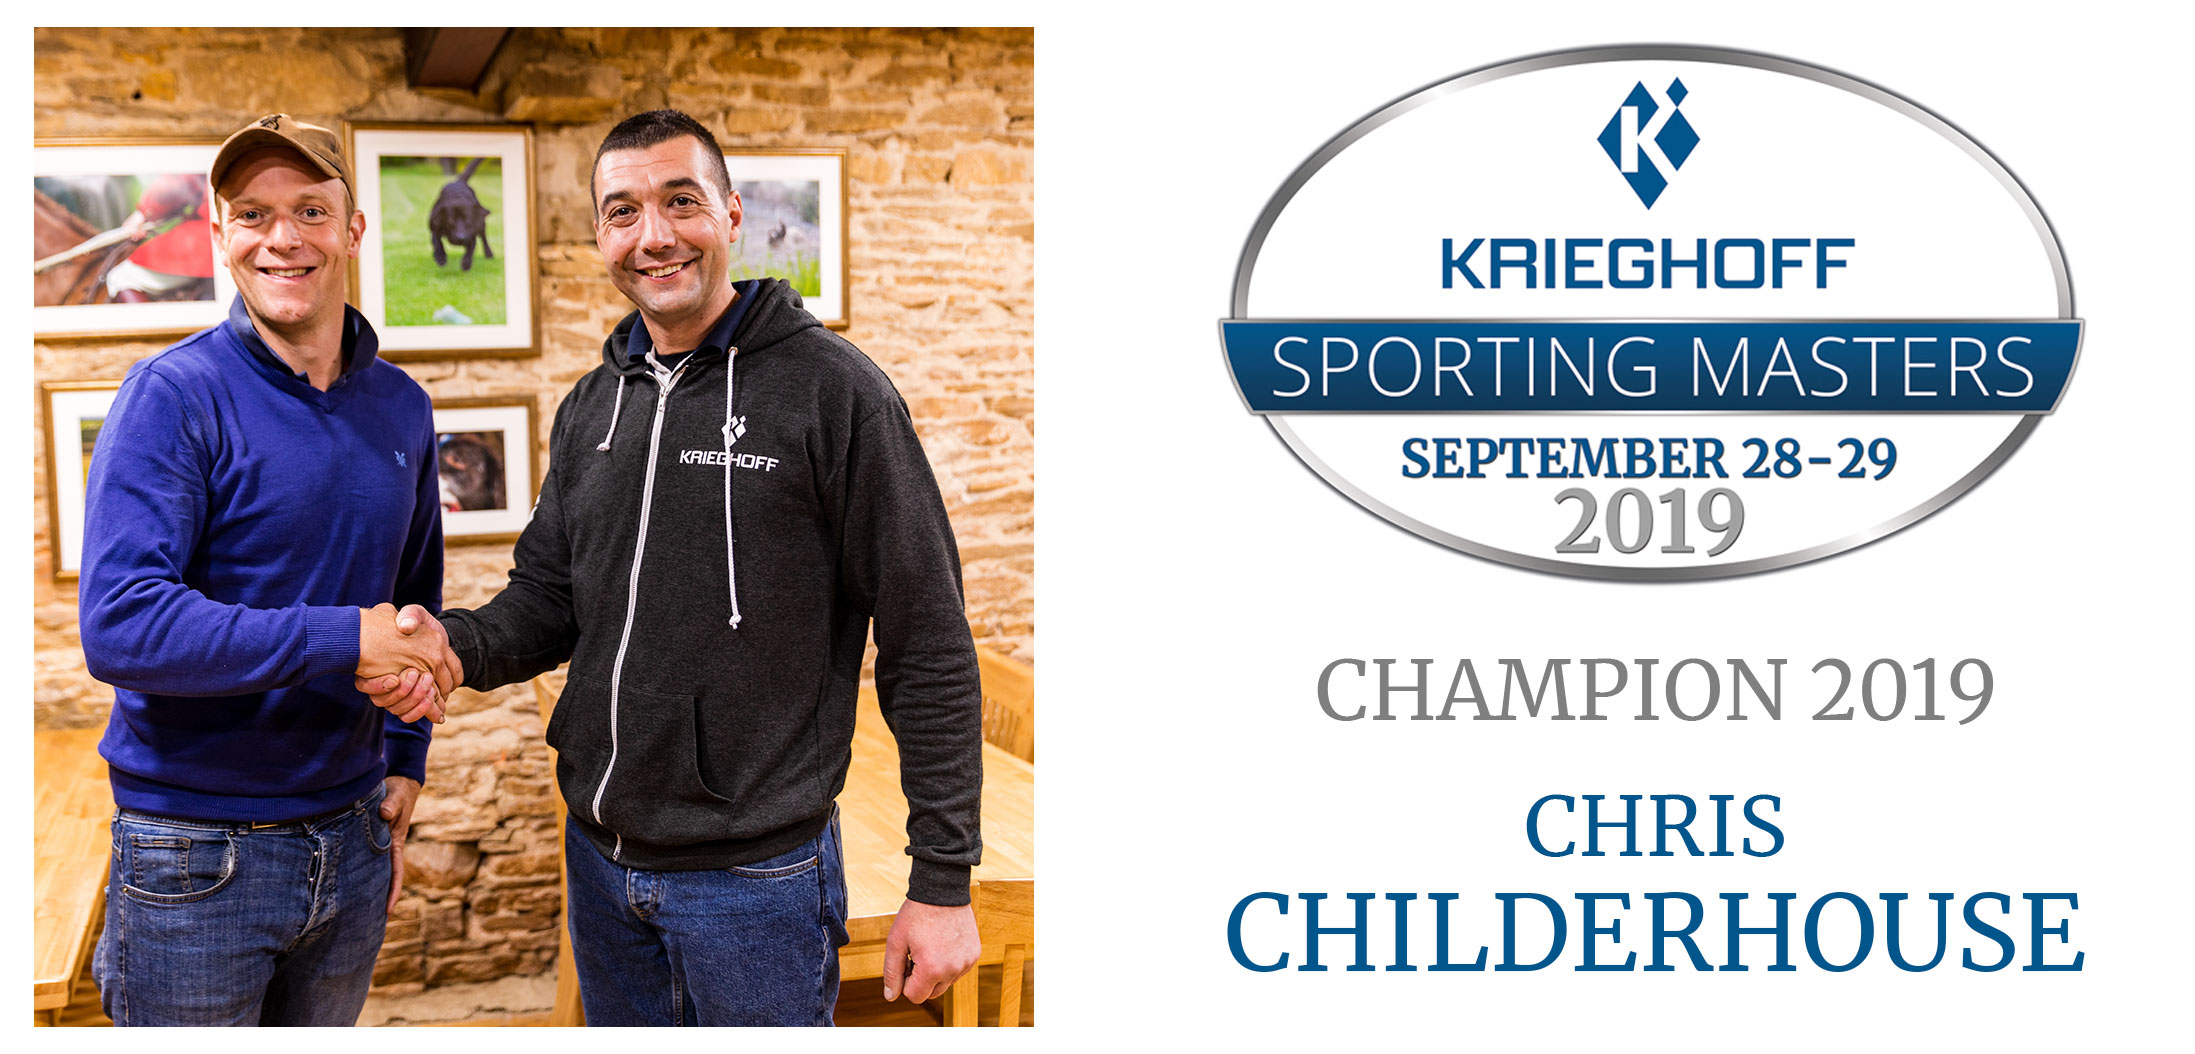 Chris Childerhouse - Champion